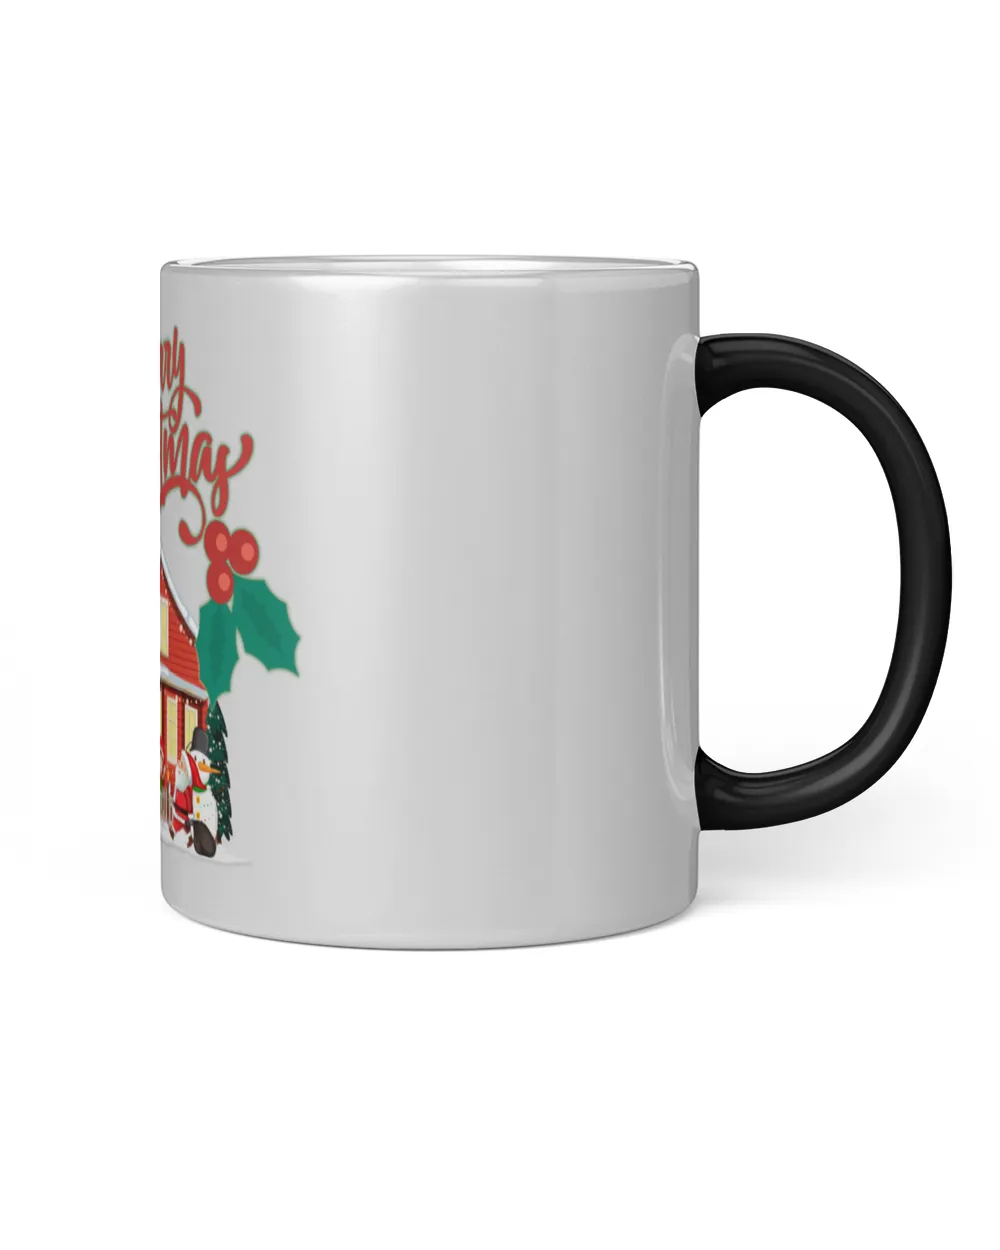 Merry Christmas Black Mug 11oz